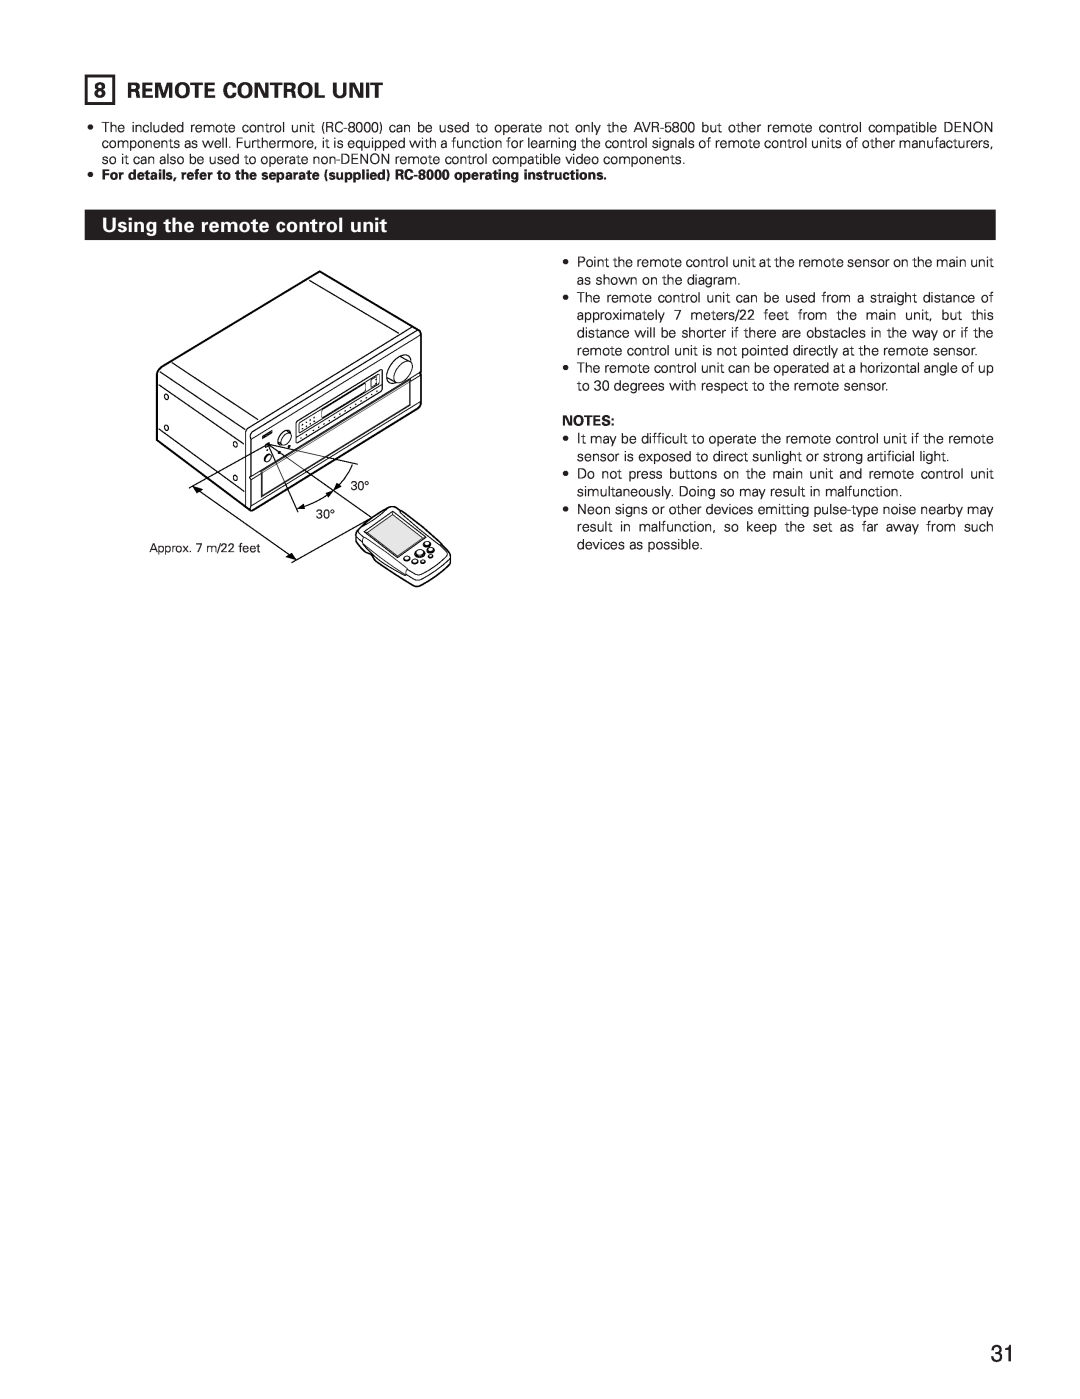 Denon AVR-5800 operating instructions 8REMOTE CONTROL UNIT, Using the remote control unit 